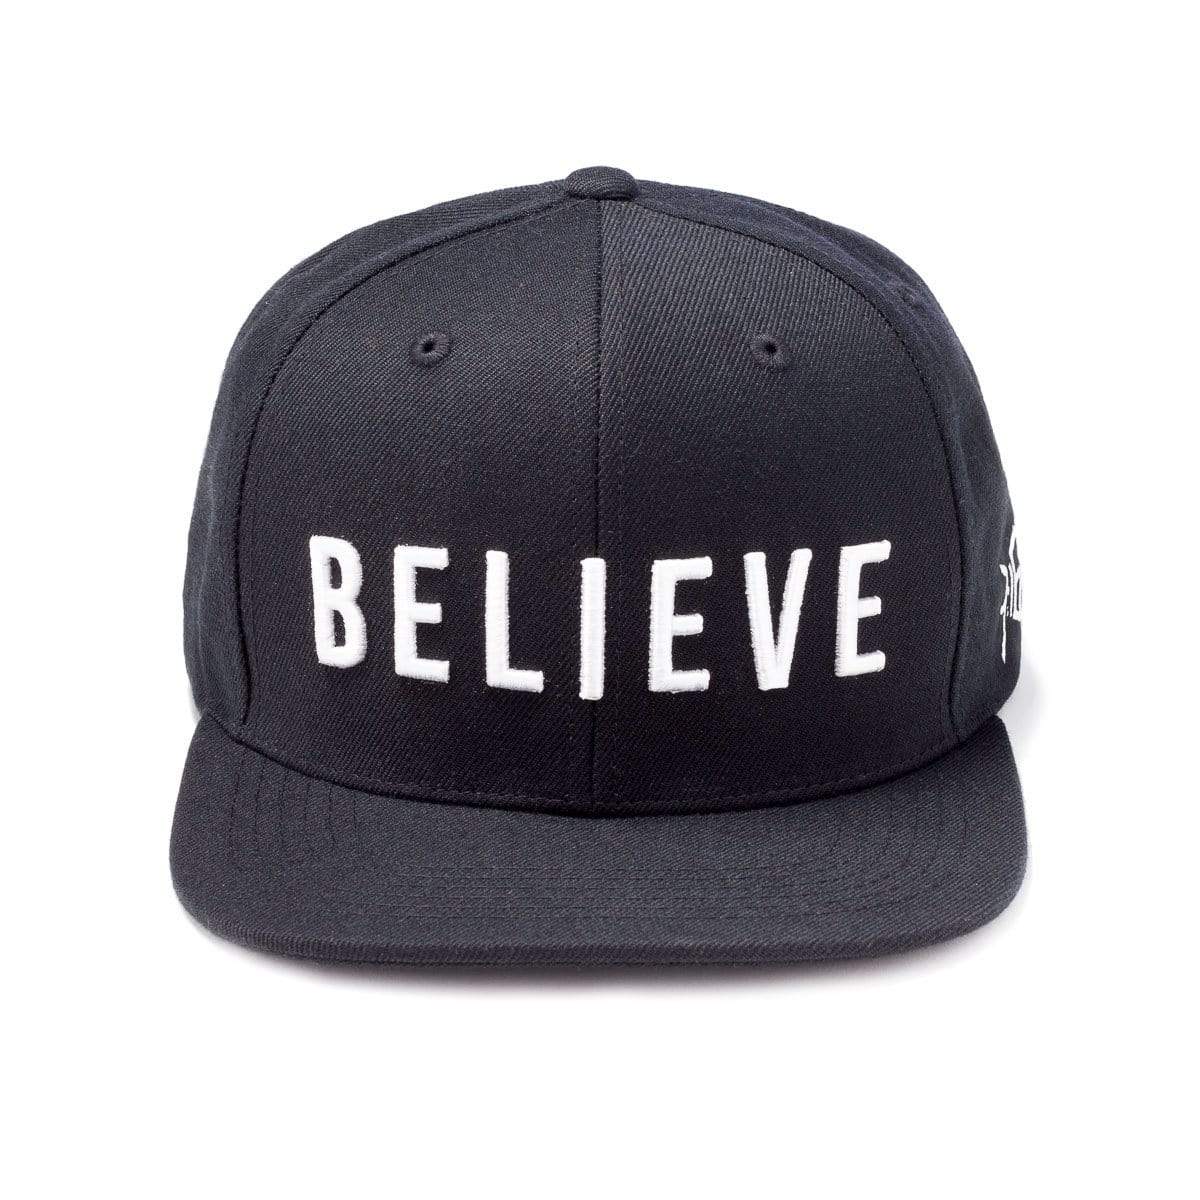 Believe Snapback Hat - Black